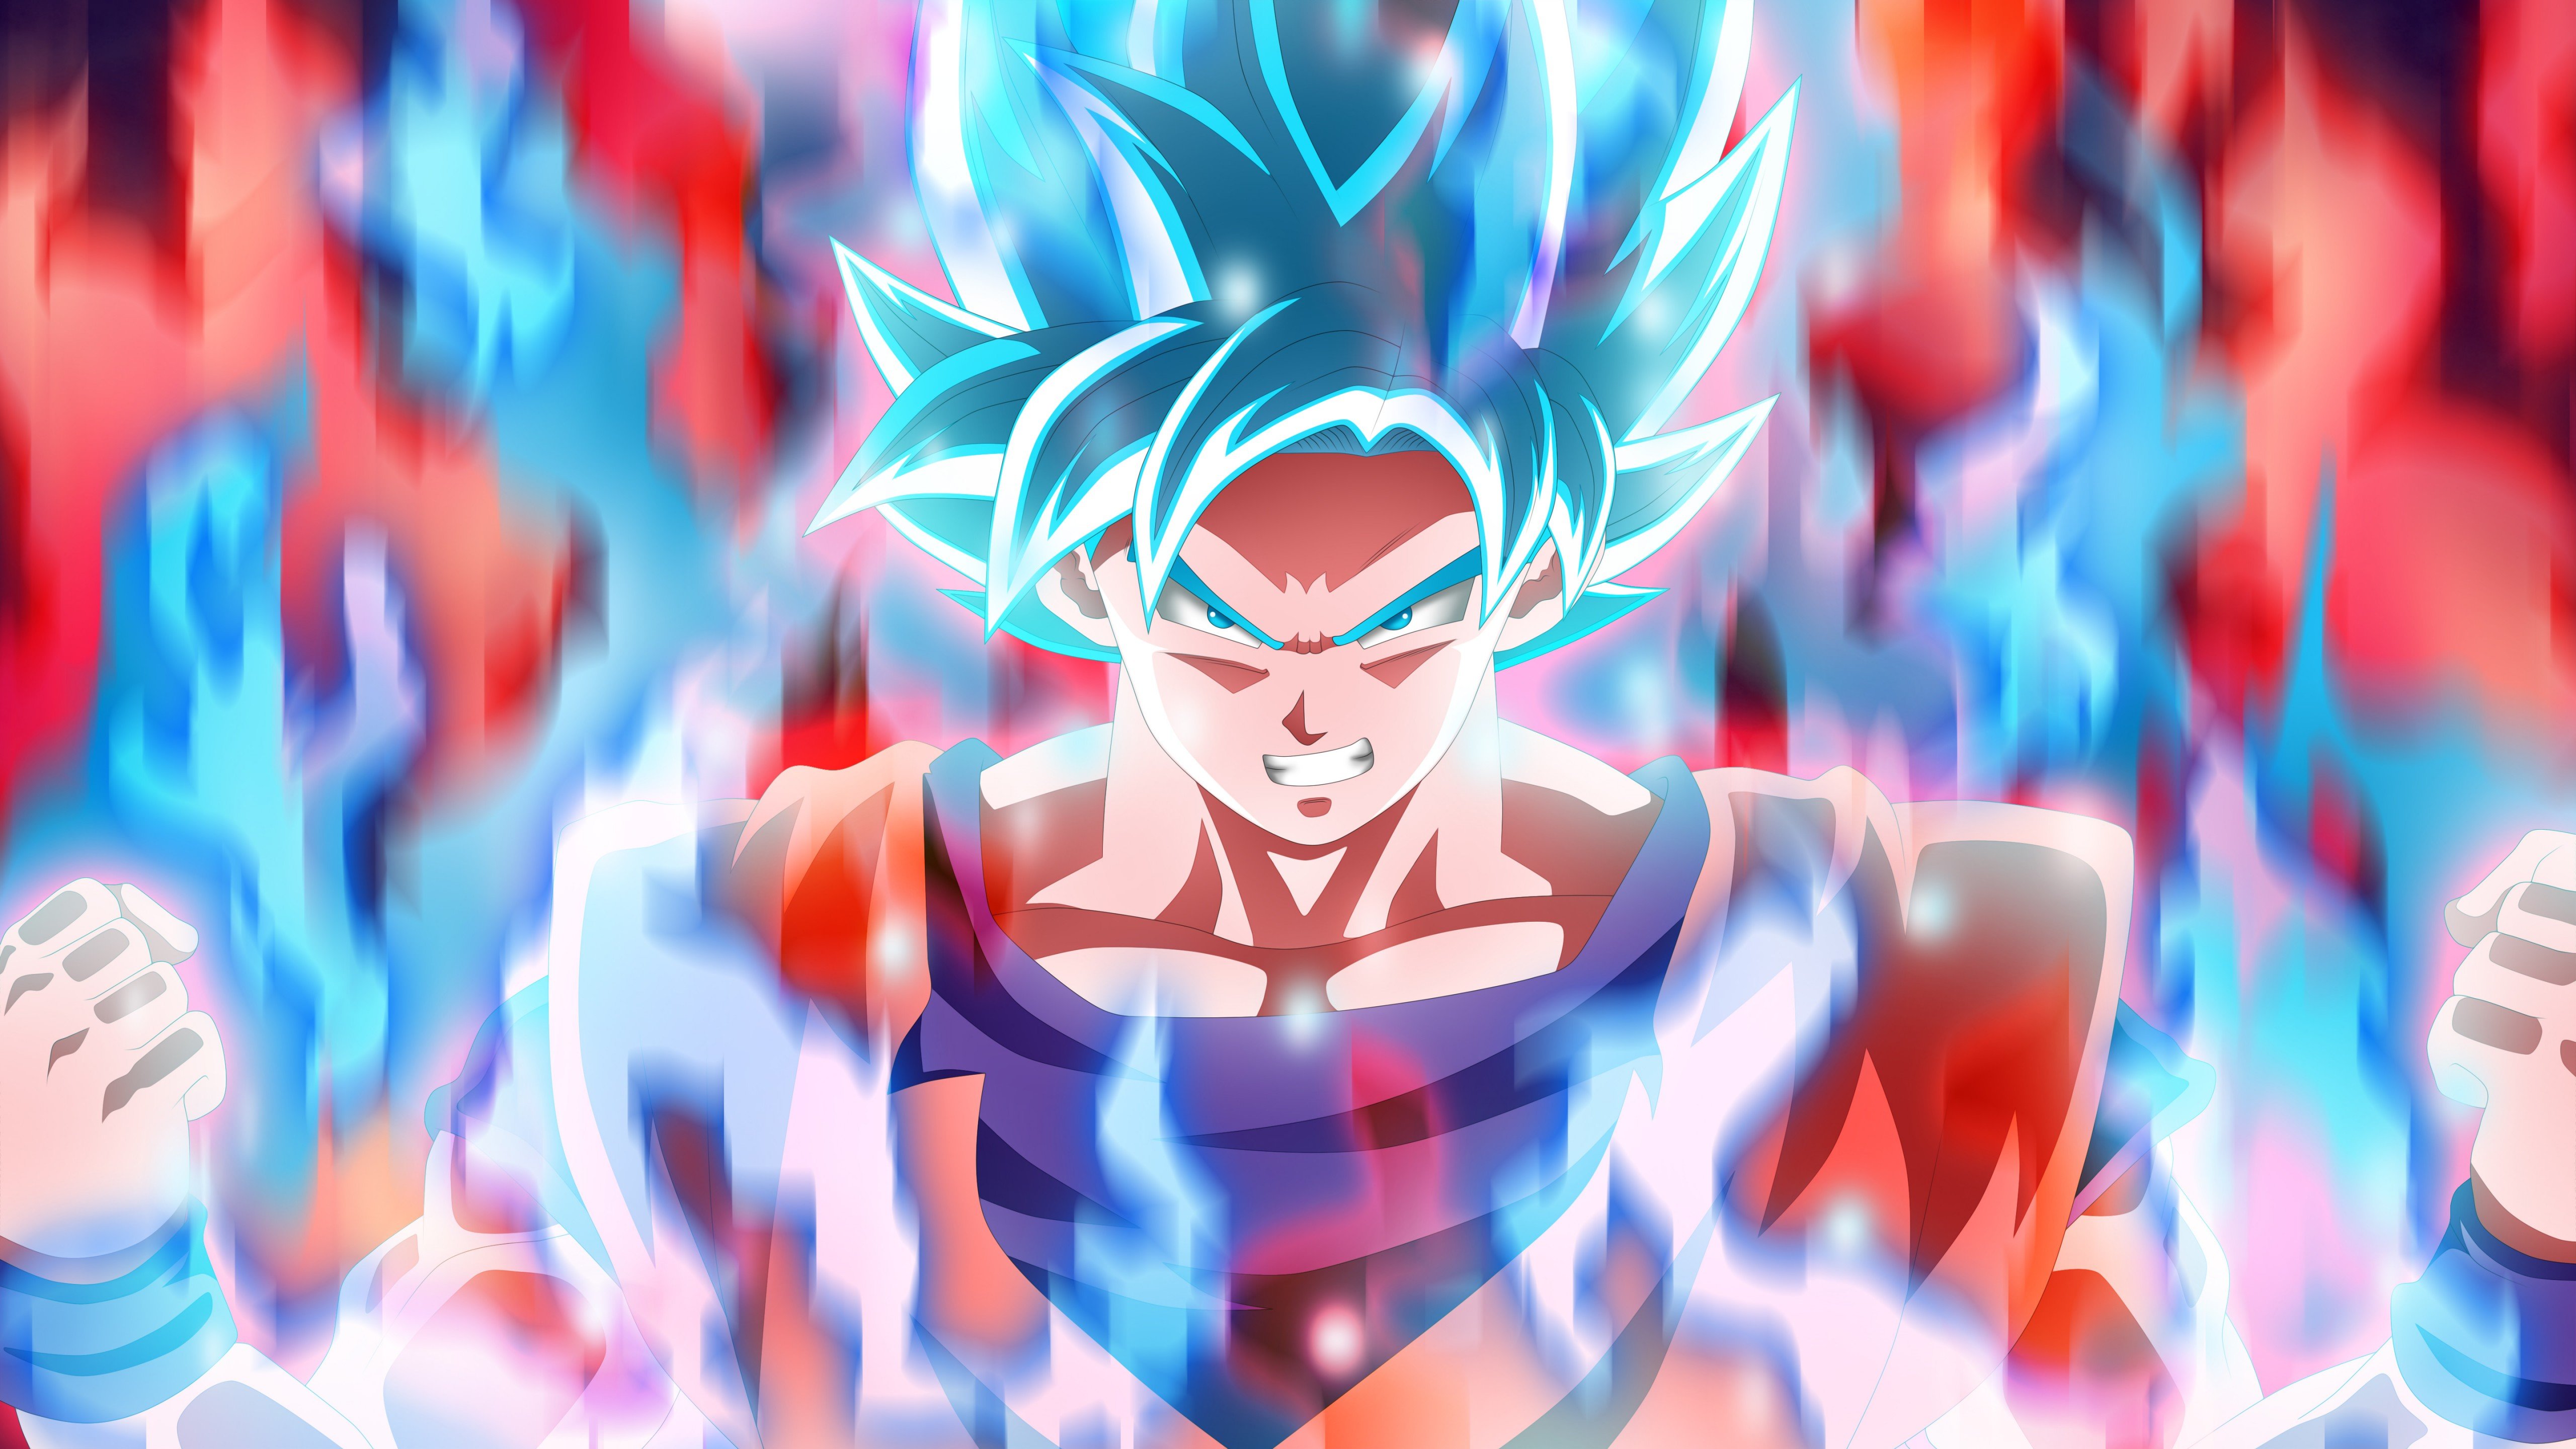 Anime Wallpaper Goku Super Saiyan Blue from Dragon Ball Super